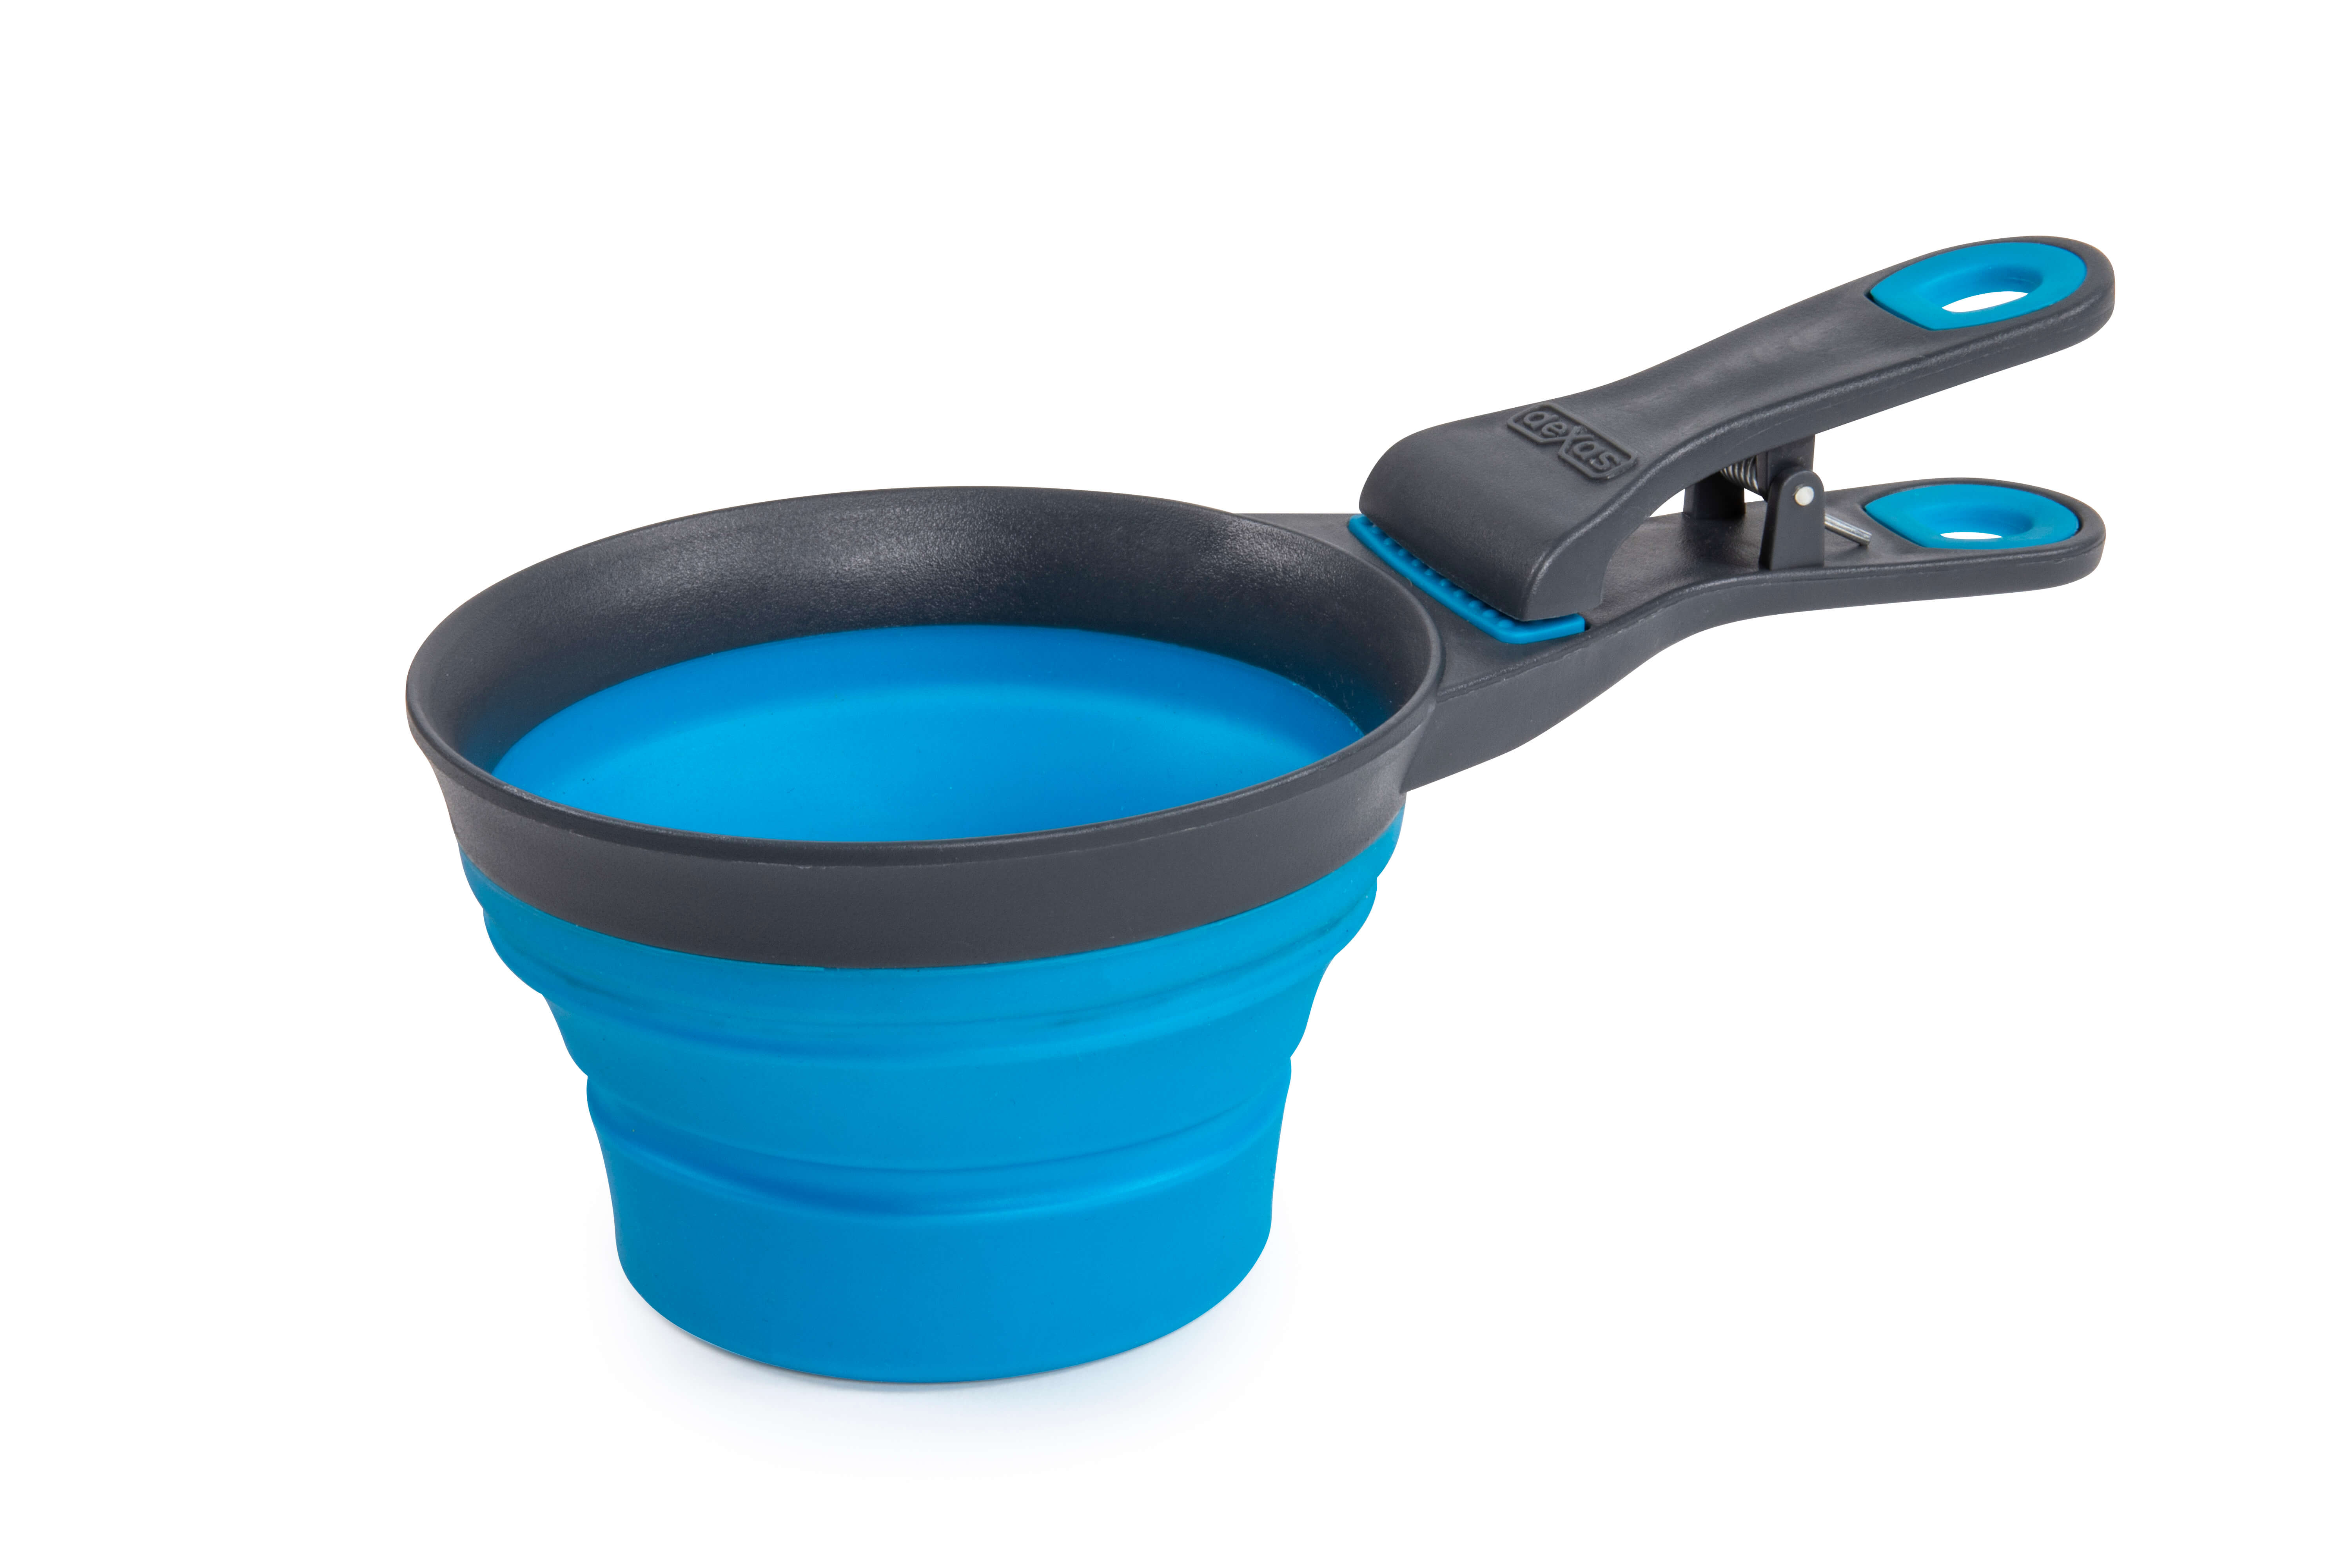 dexas klipcoop in blue 2 cups